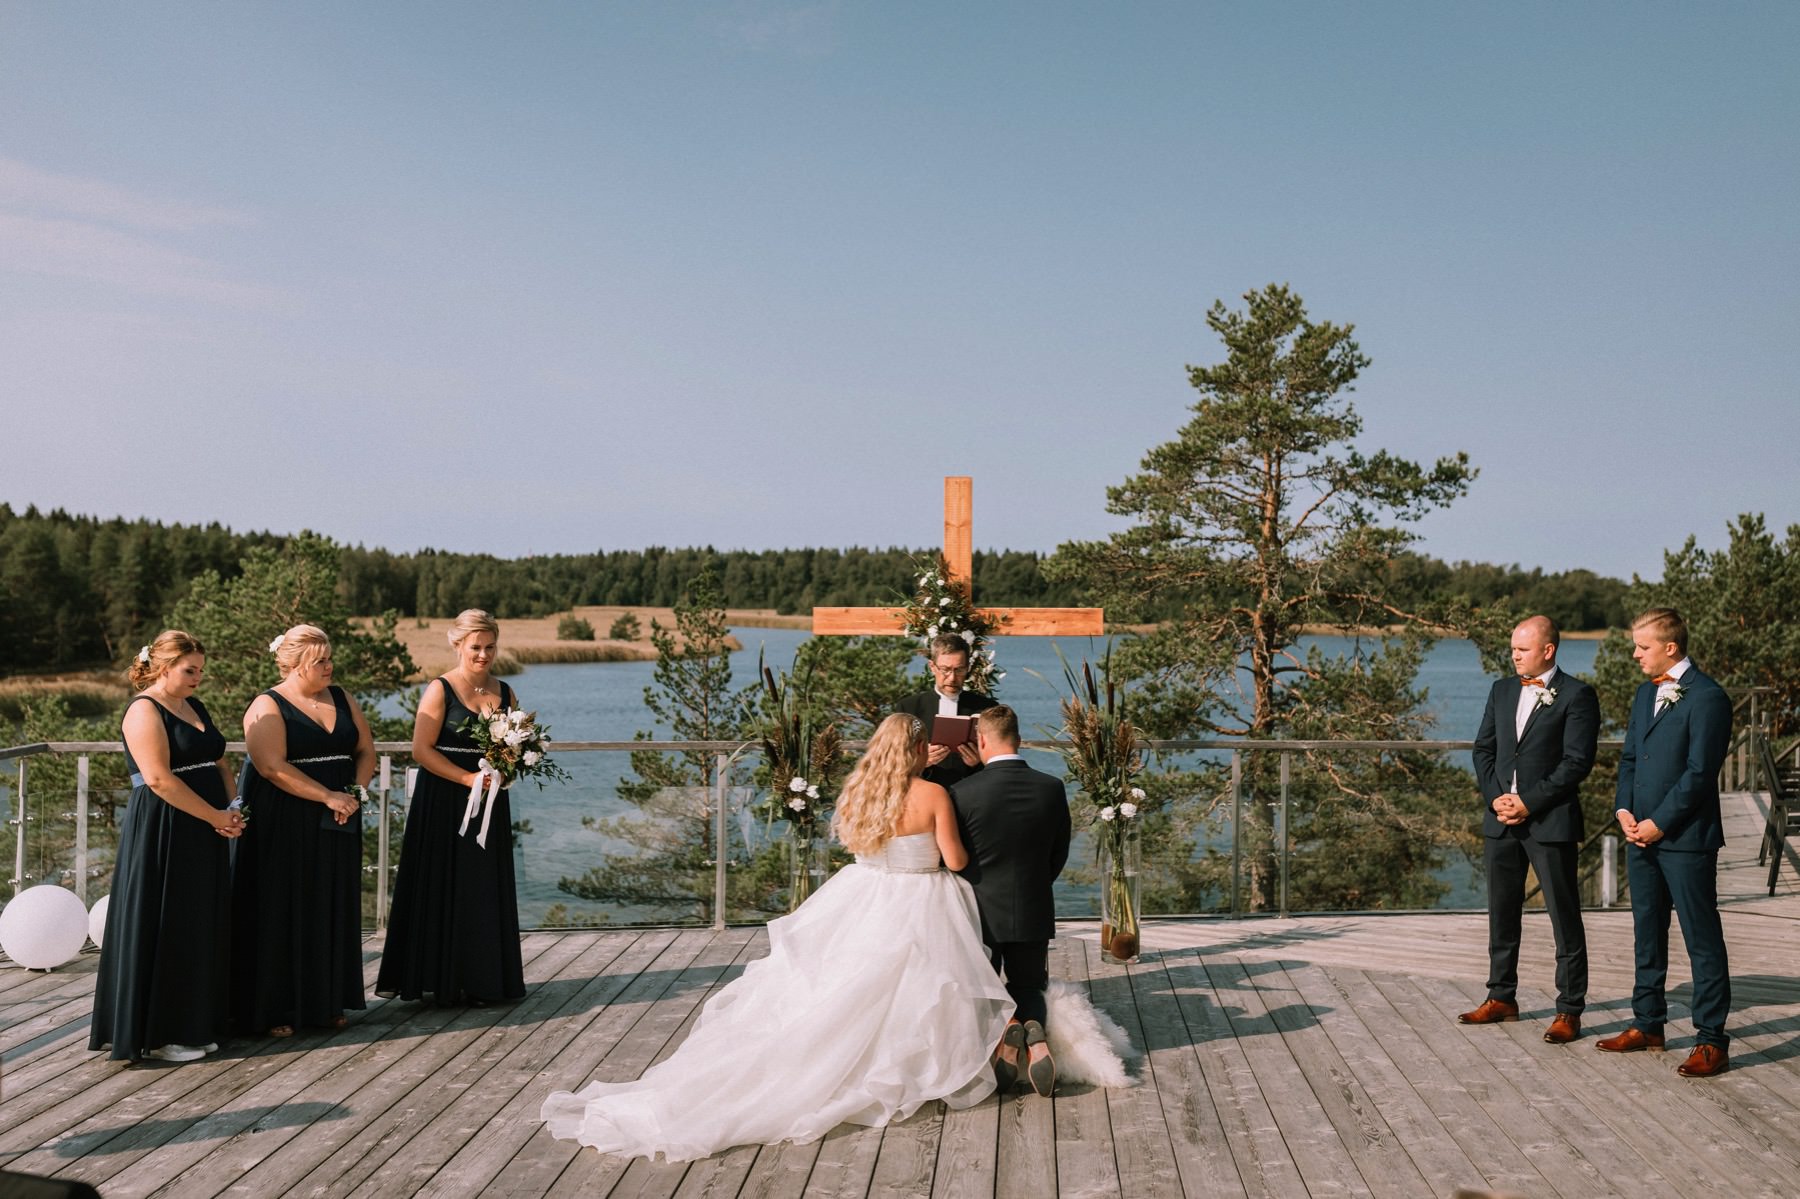 cross wedding backdrop